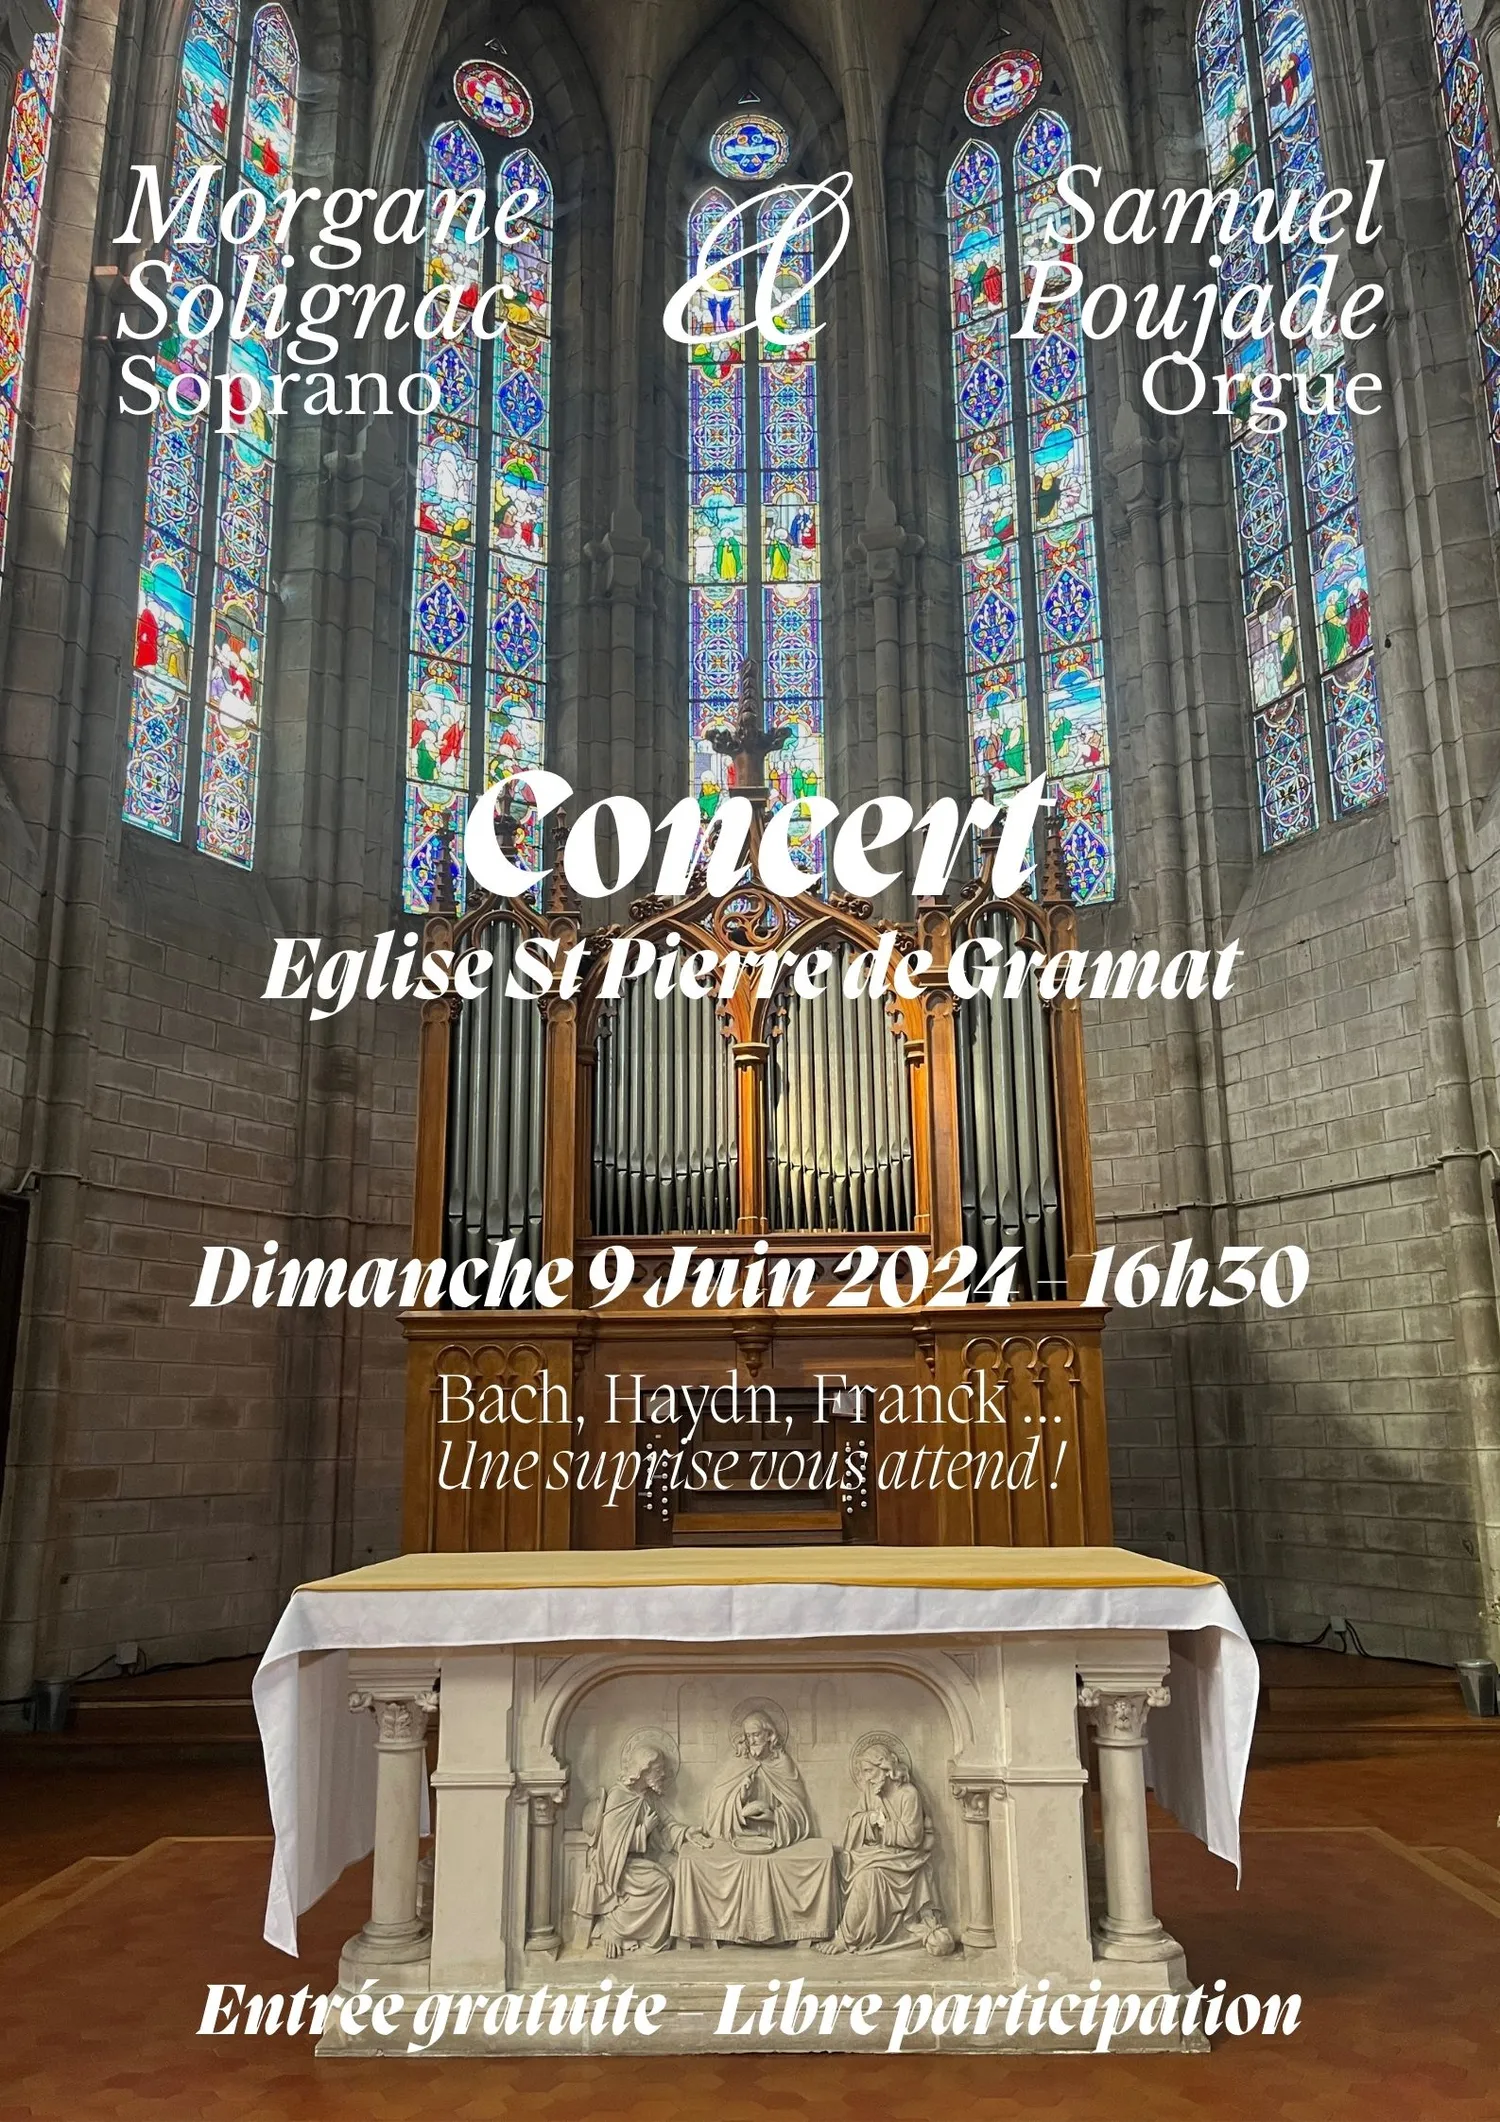 Image qui illustre: Concert Soprano & Orgue Avec Morgane Solignac Et Samuel Poujade à Gramat - 1